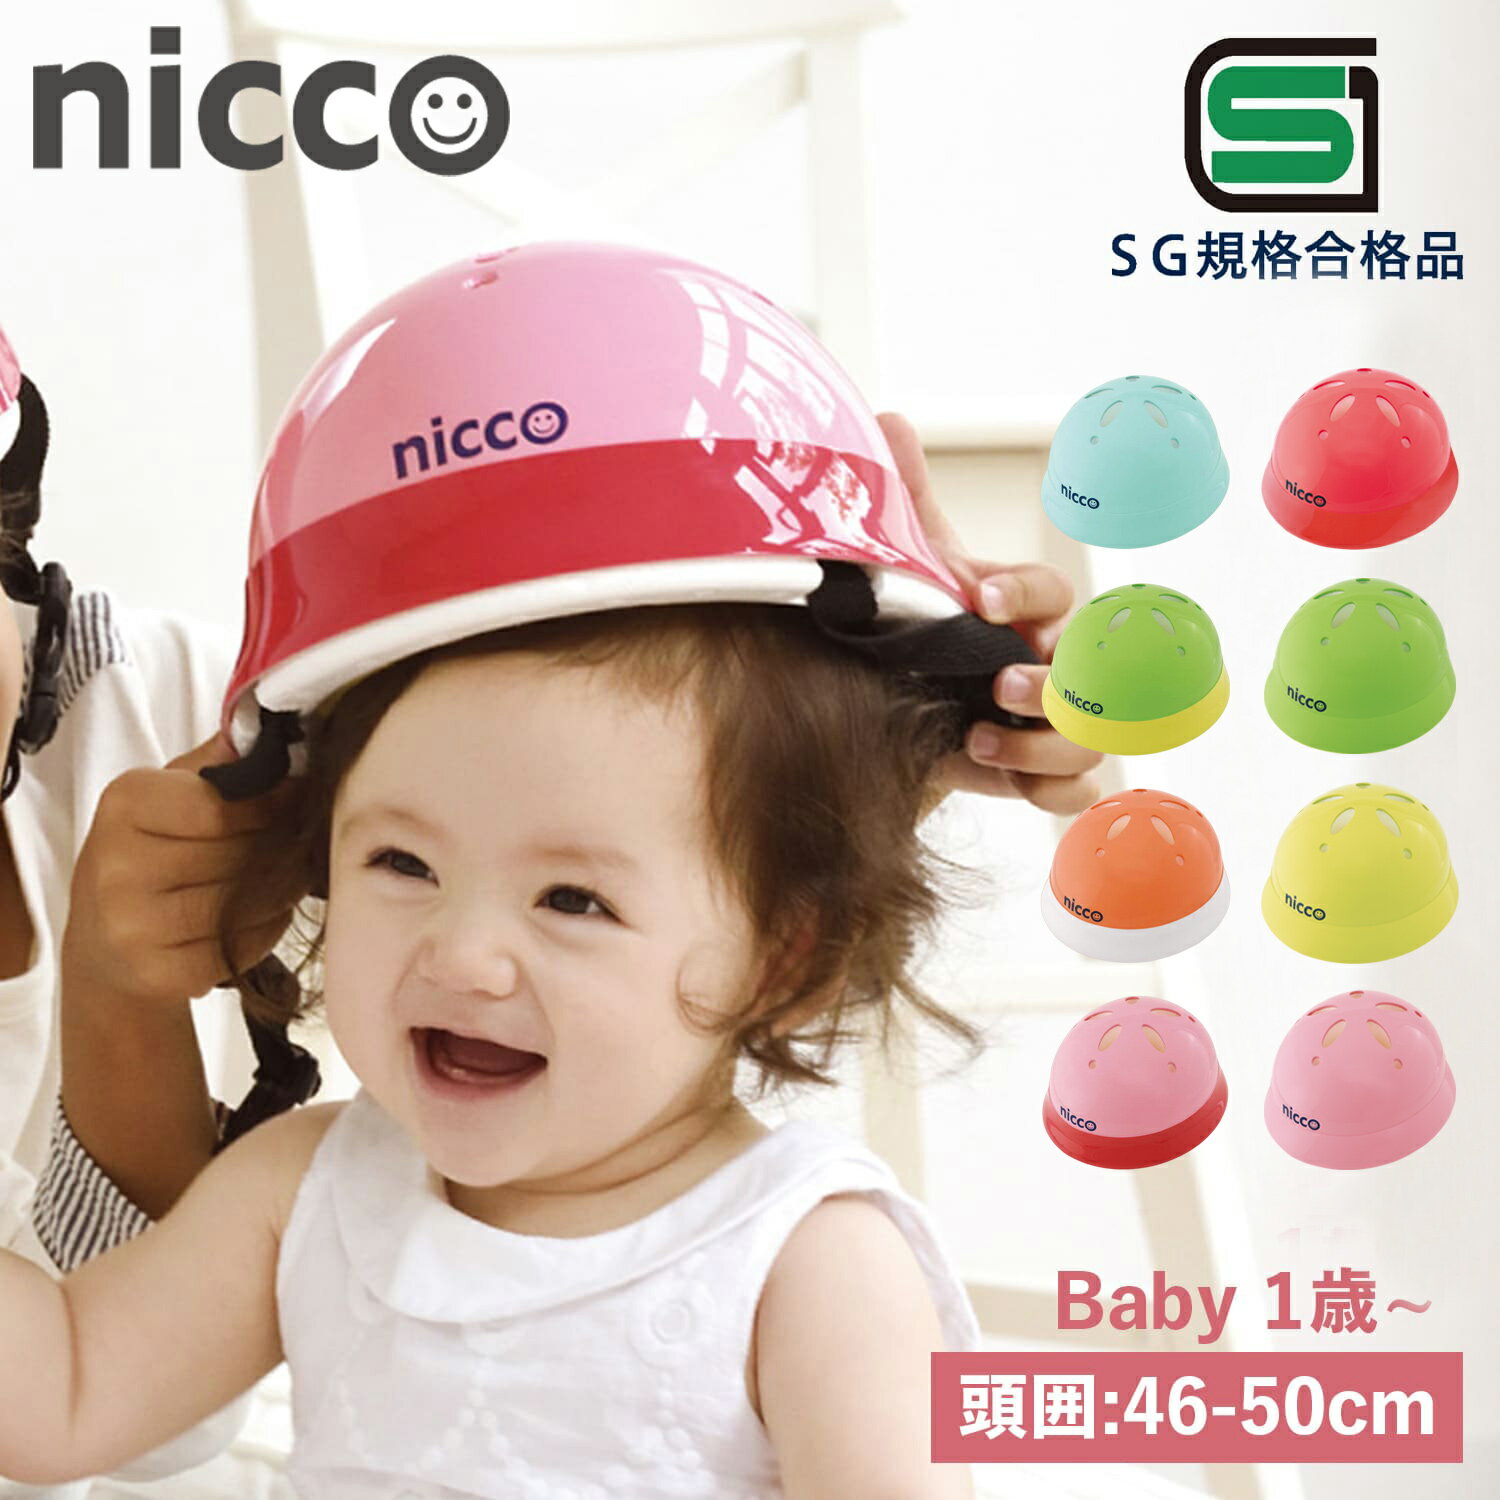 nicco ニコ ヘルメット 自転車 子供用 幼児 ベビー キッズ 1歳 赤ちゃん SGマーク サイズ調整可能 男の子 女の子 日本製 KH002